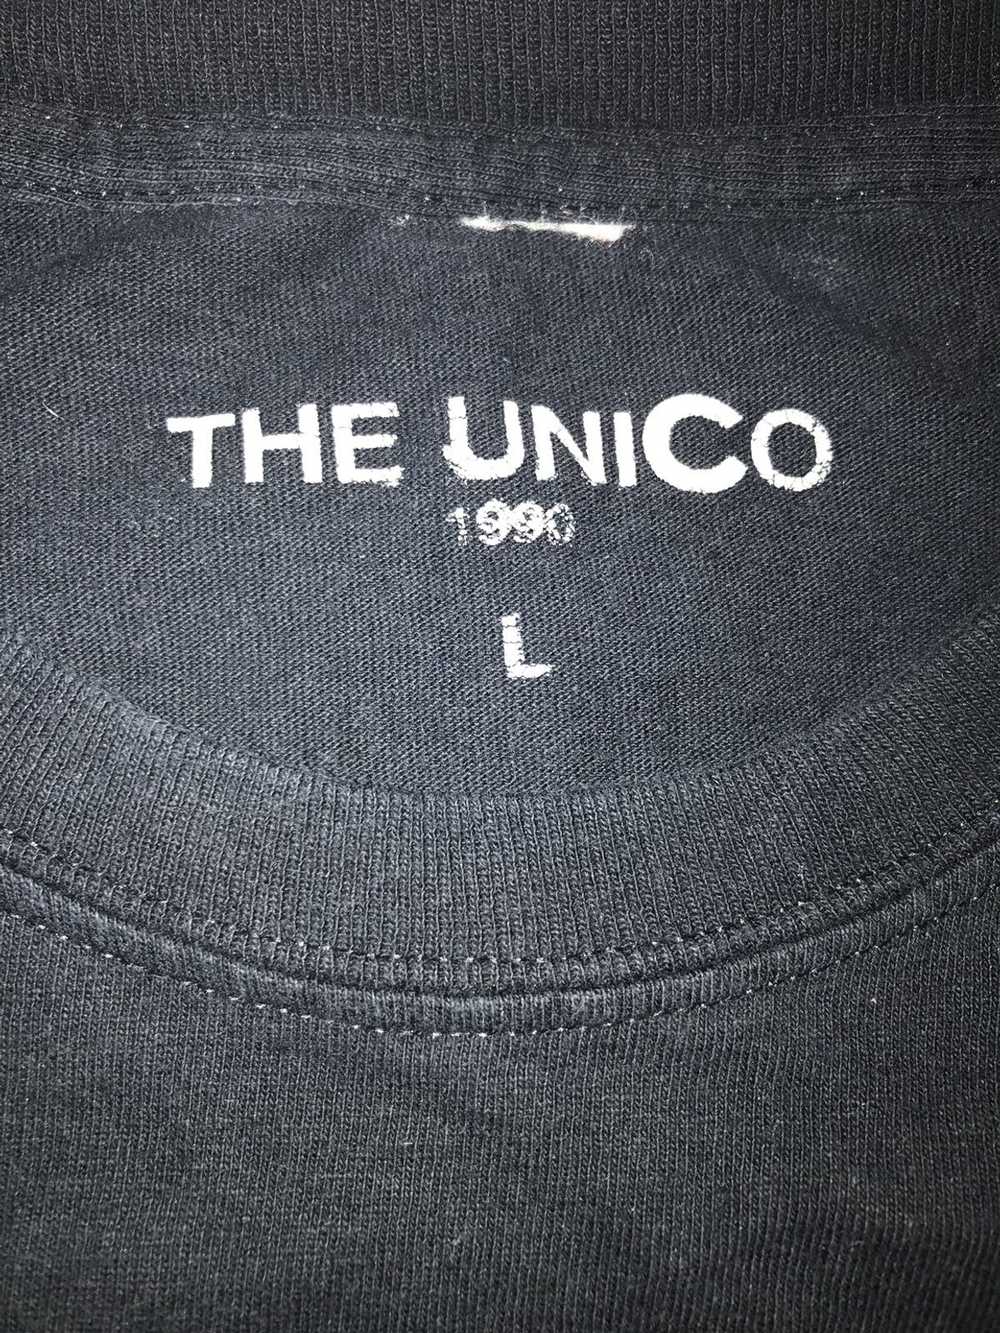 The Unico 1990 The Unico 1990 “who shot you?” Tee - image 2